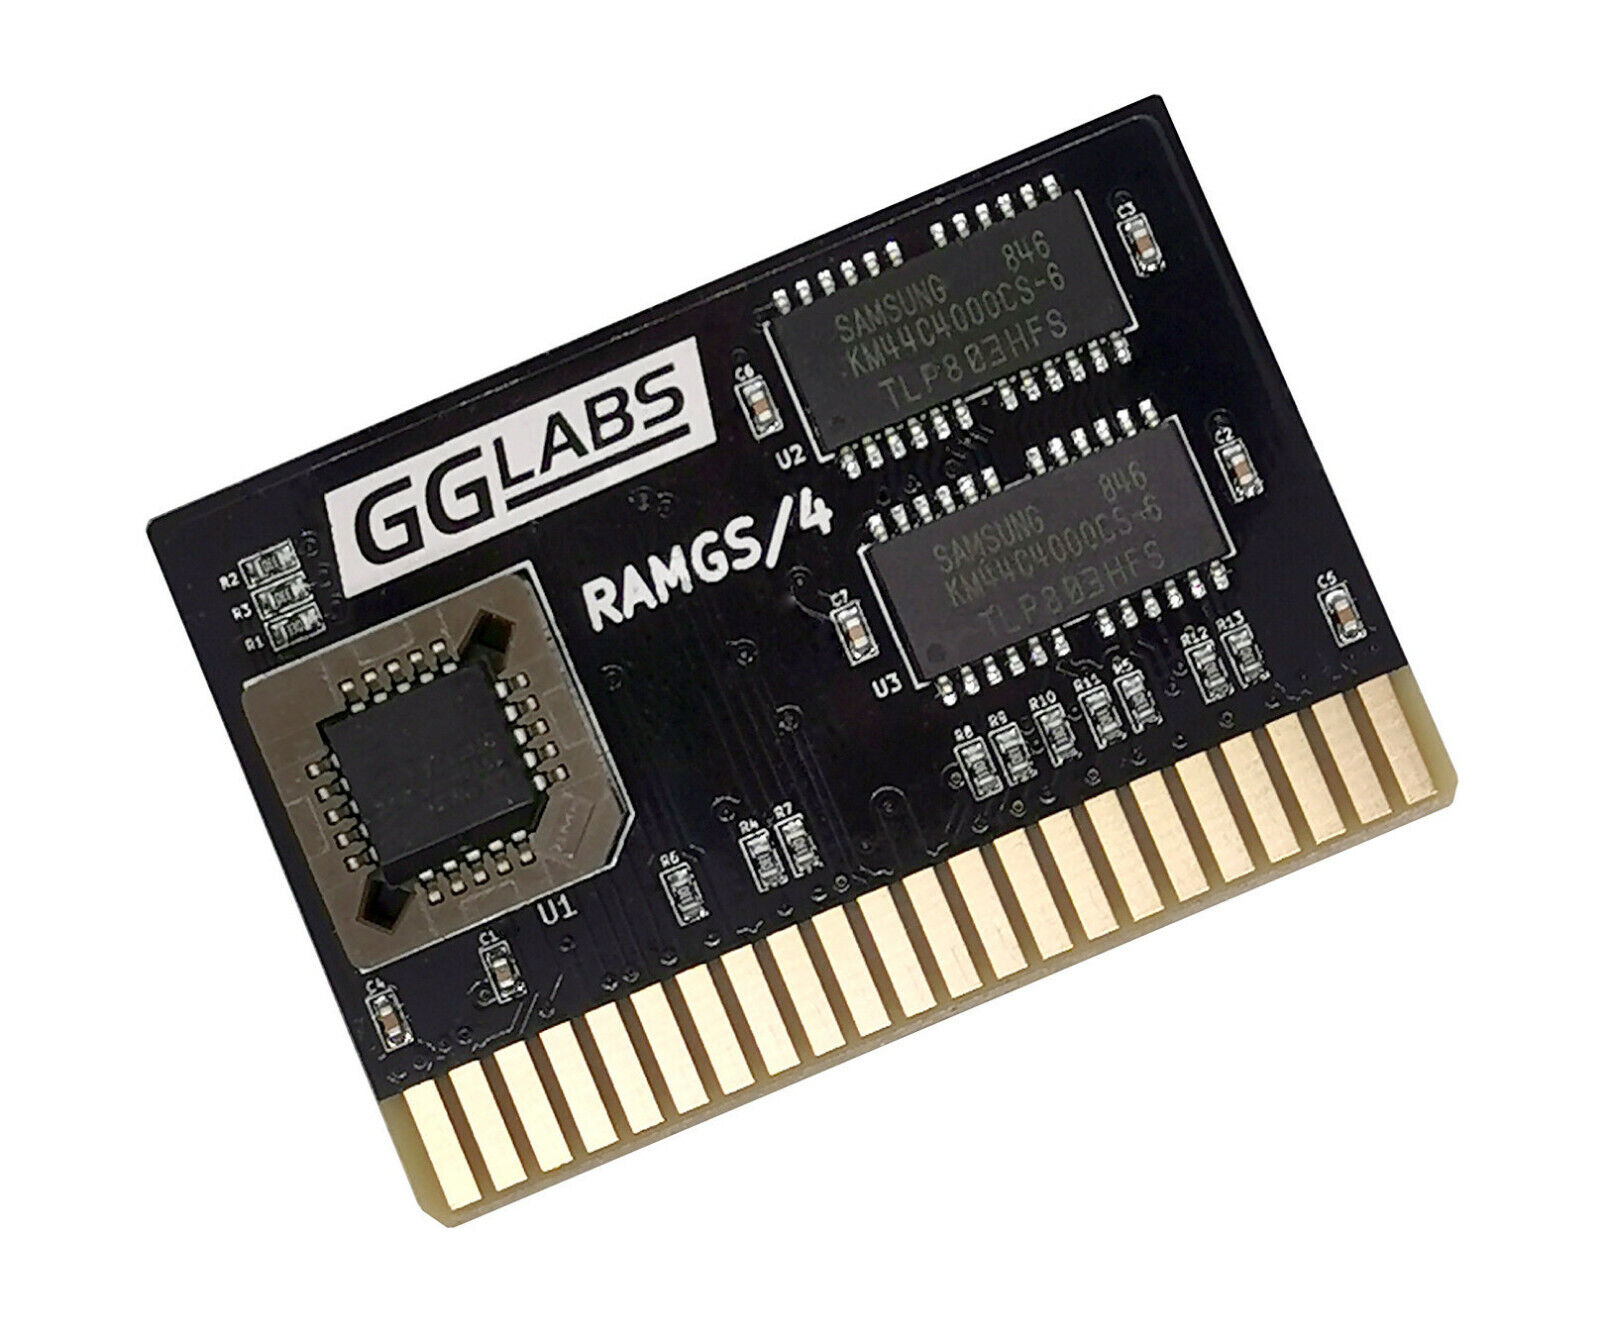 GGLABS RAMGS/4 Apple IIgs 4MB memory expansion - 4M RAM GS/OS